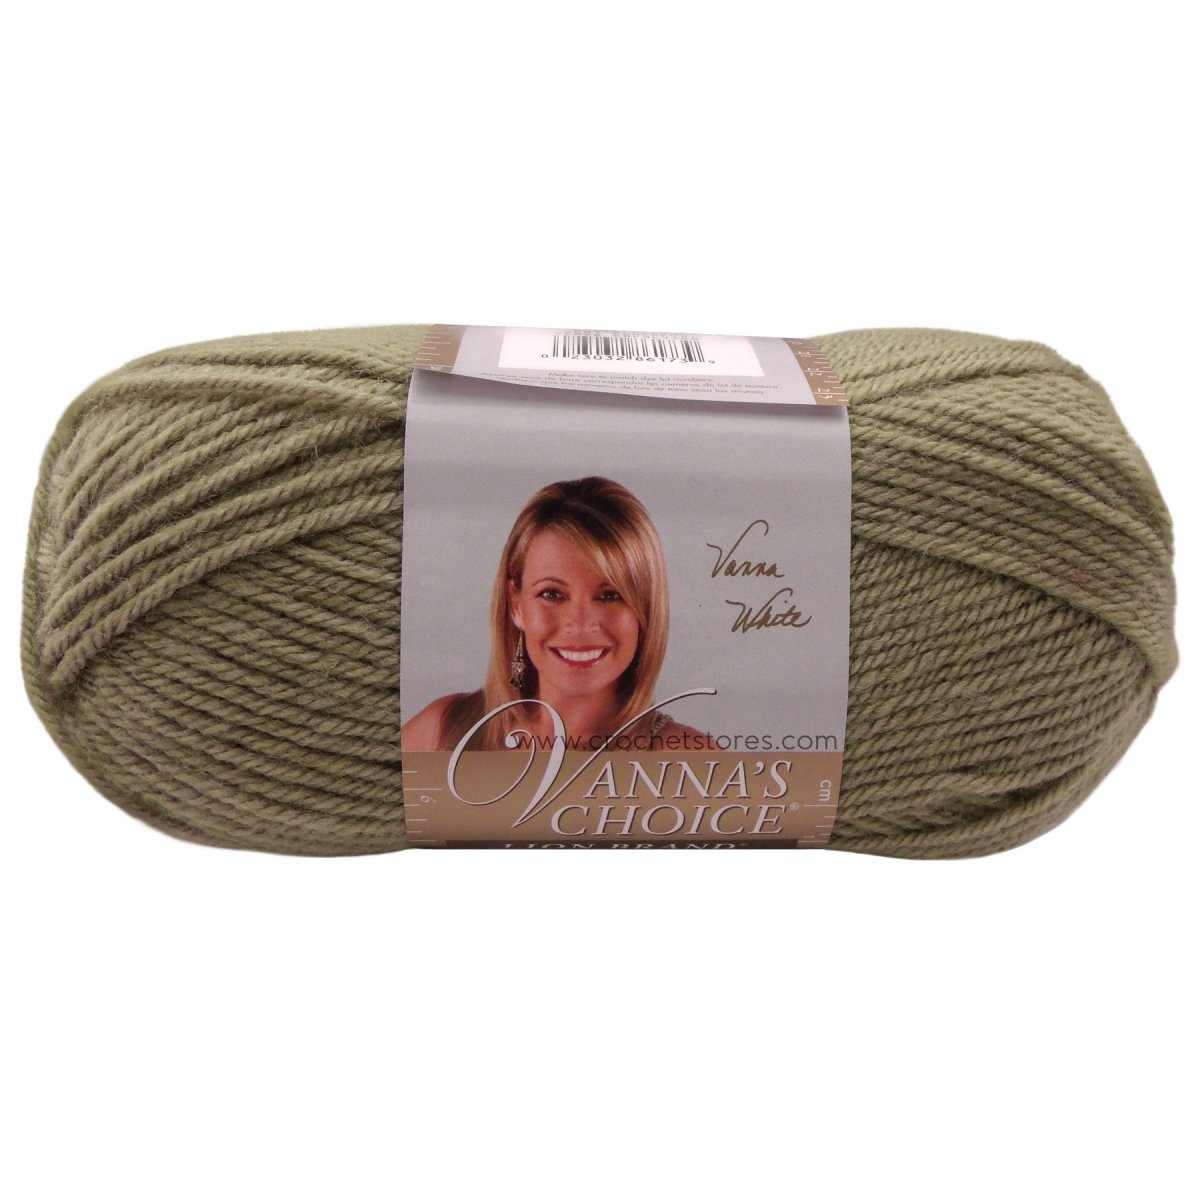 VANNAS CHOICE - Crochetstores860-173